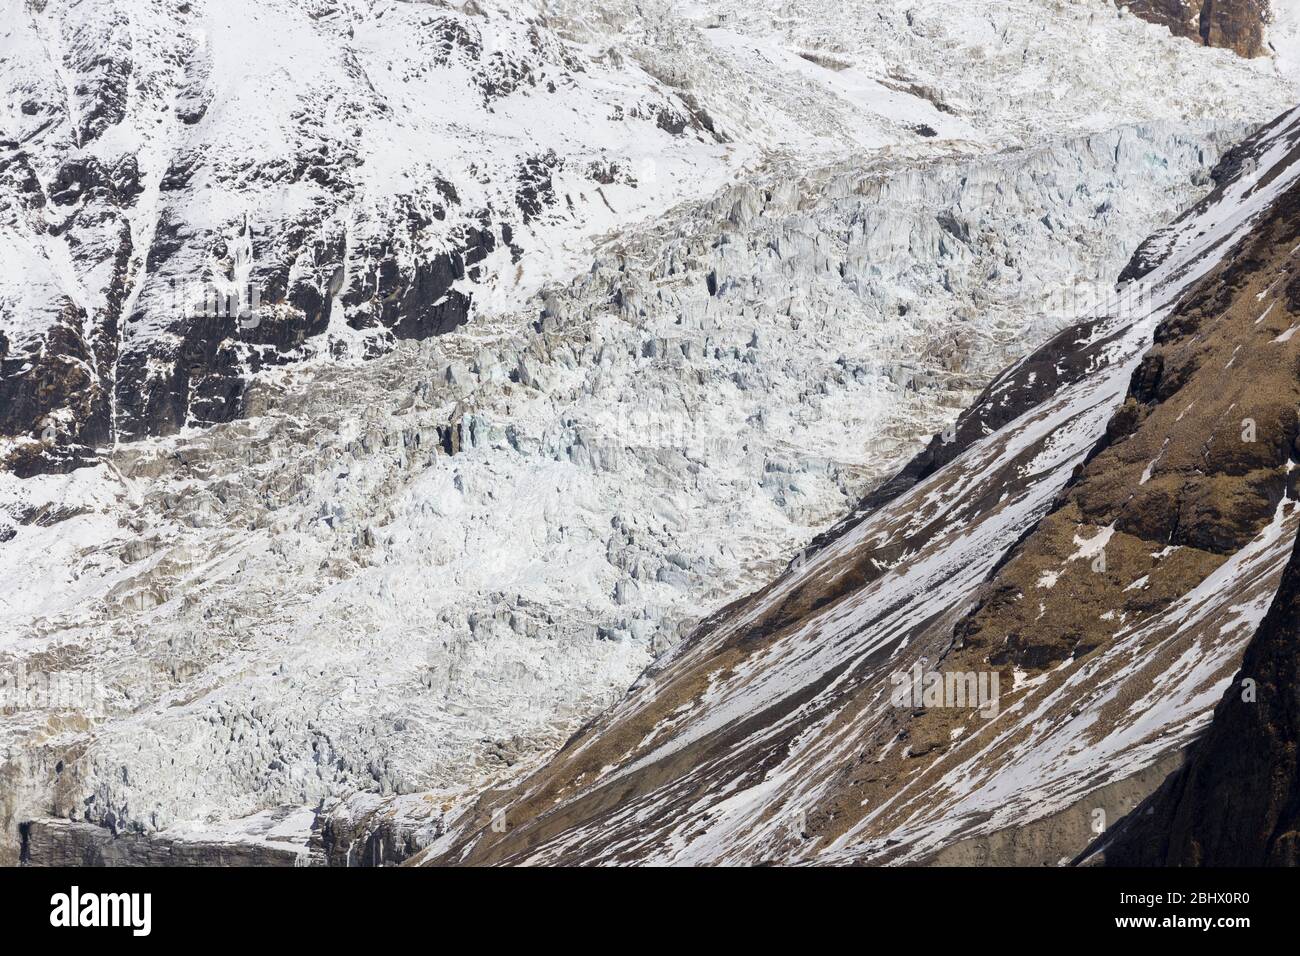 South Annapurna Glacier Iceberg Winter Landscape Panorama near Base Camp Sanctuary in Nepal Himalaya Mountains Stock Photo